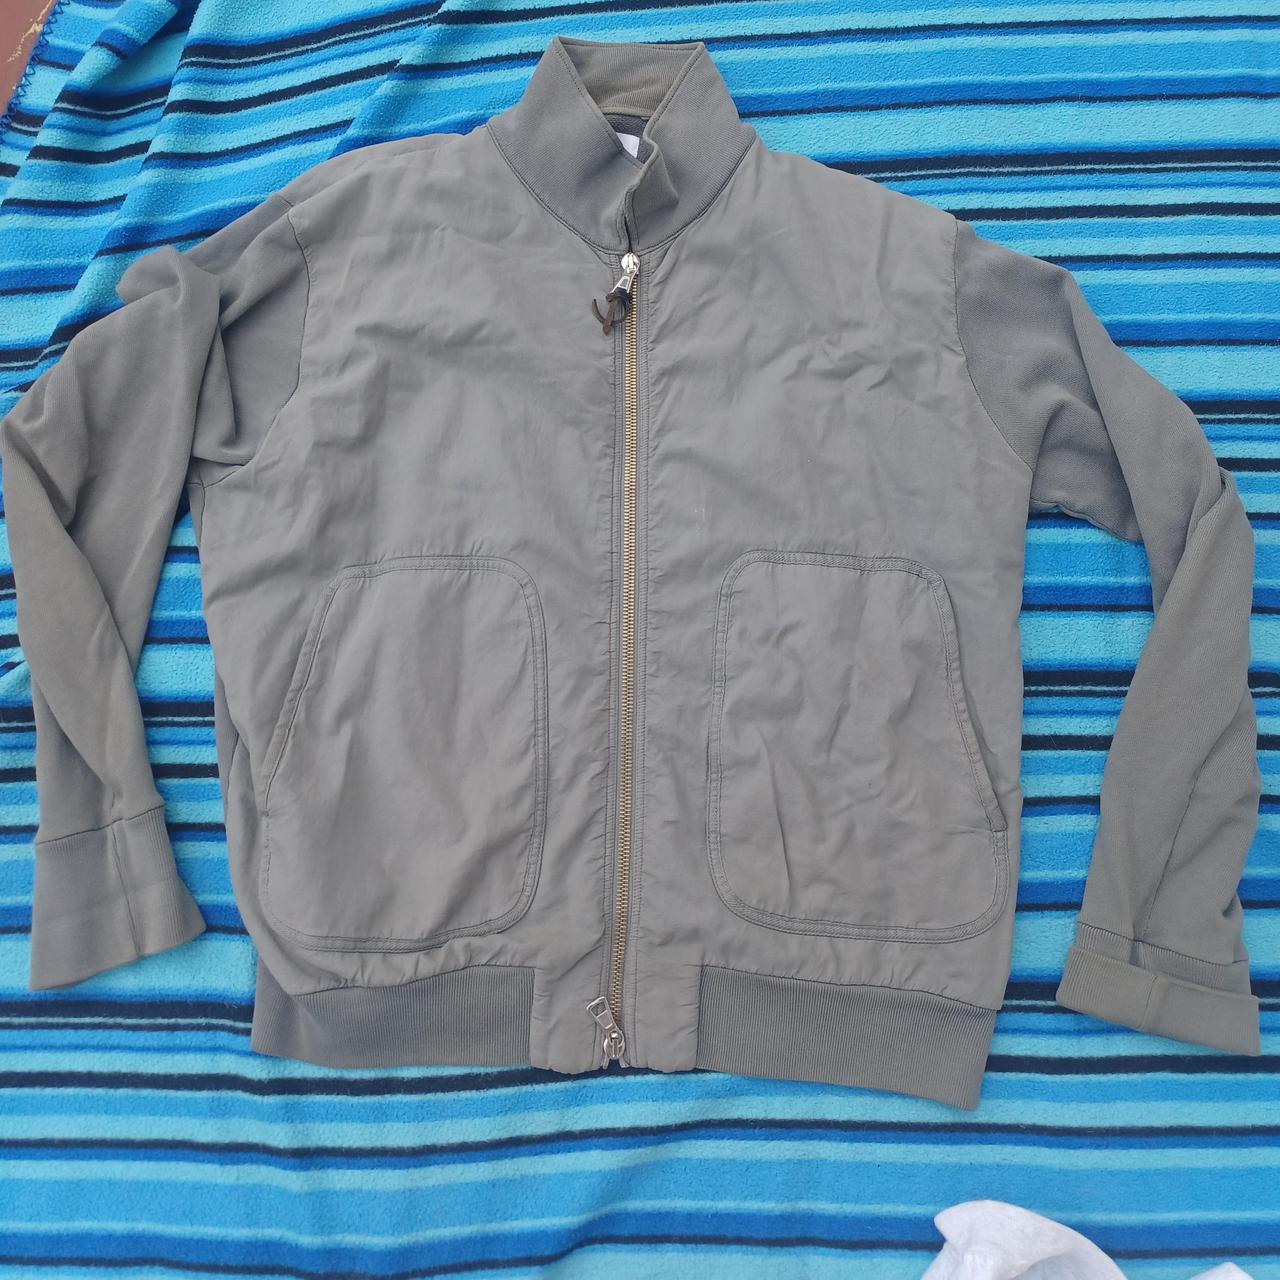 Product Image 1 - Albam bomber jacket. Purchased years